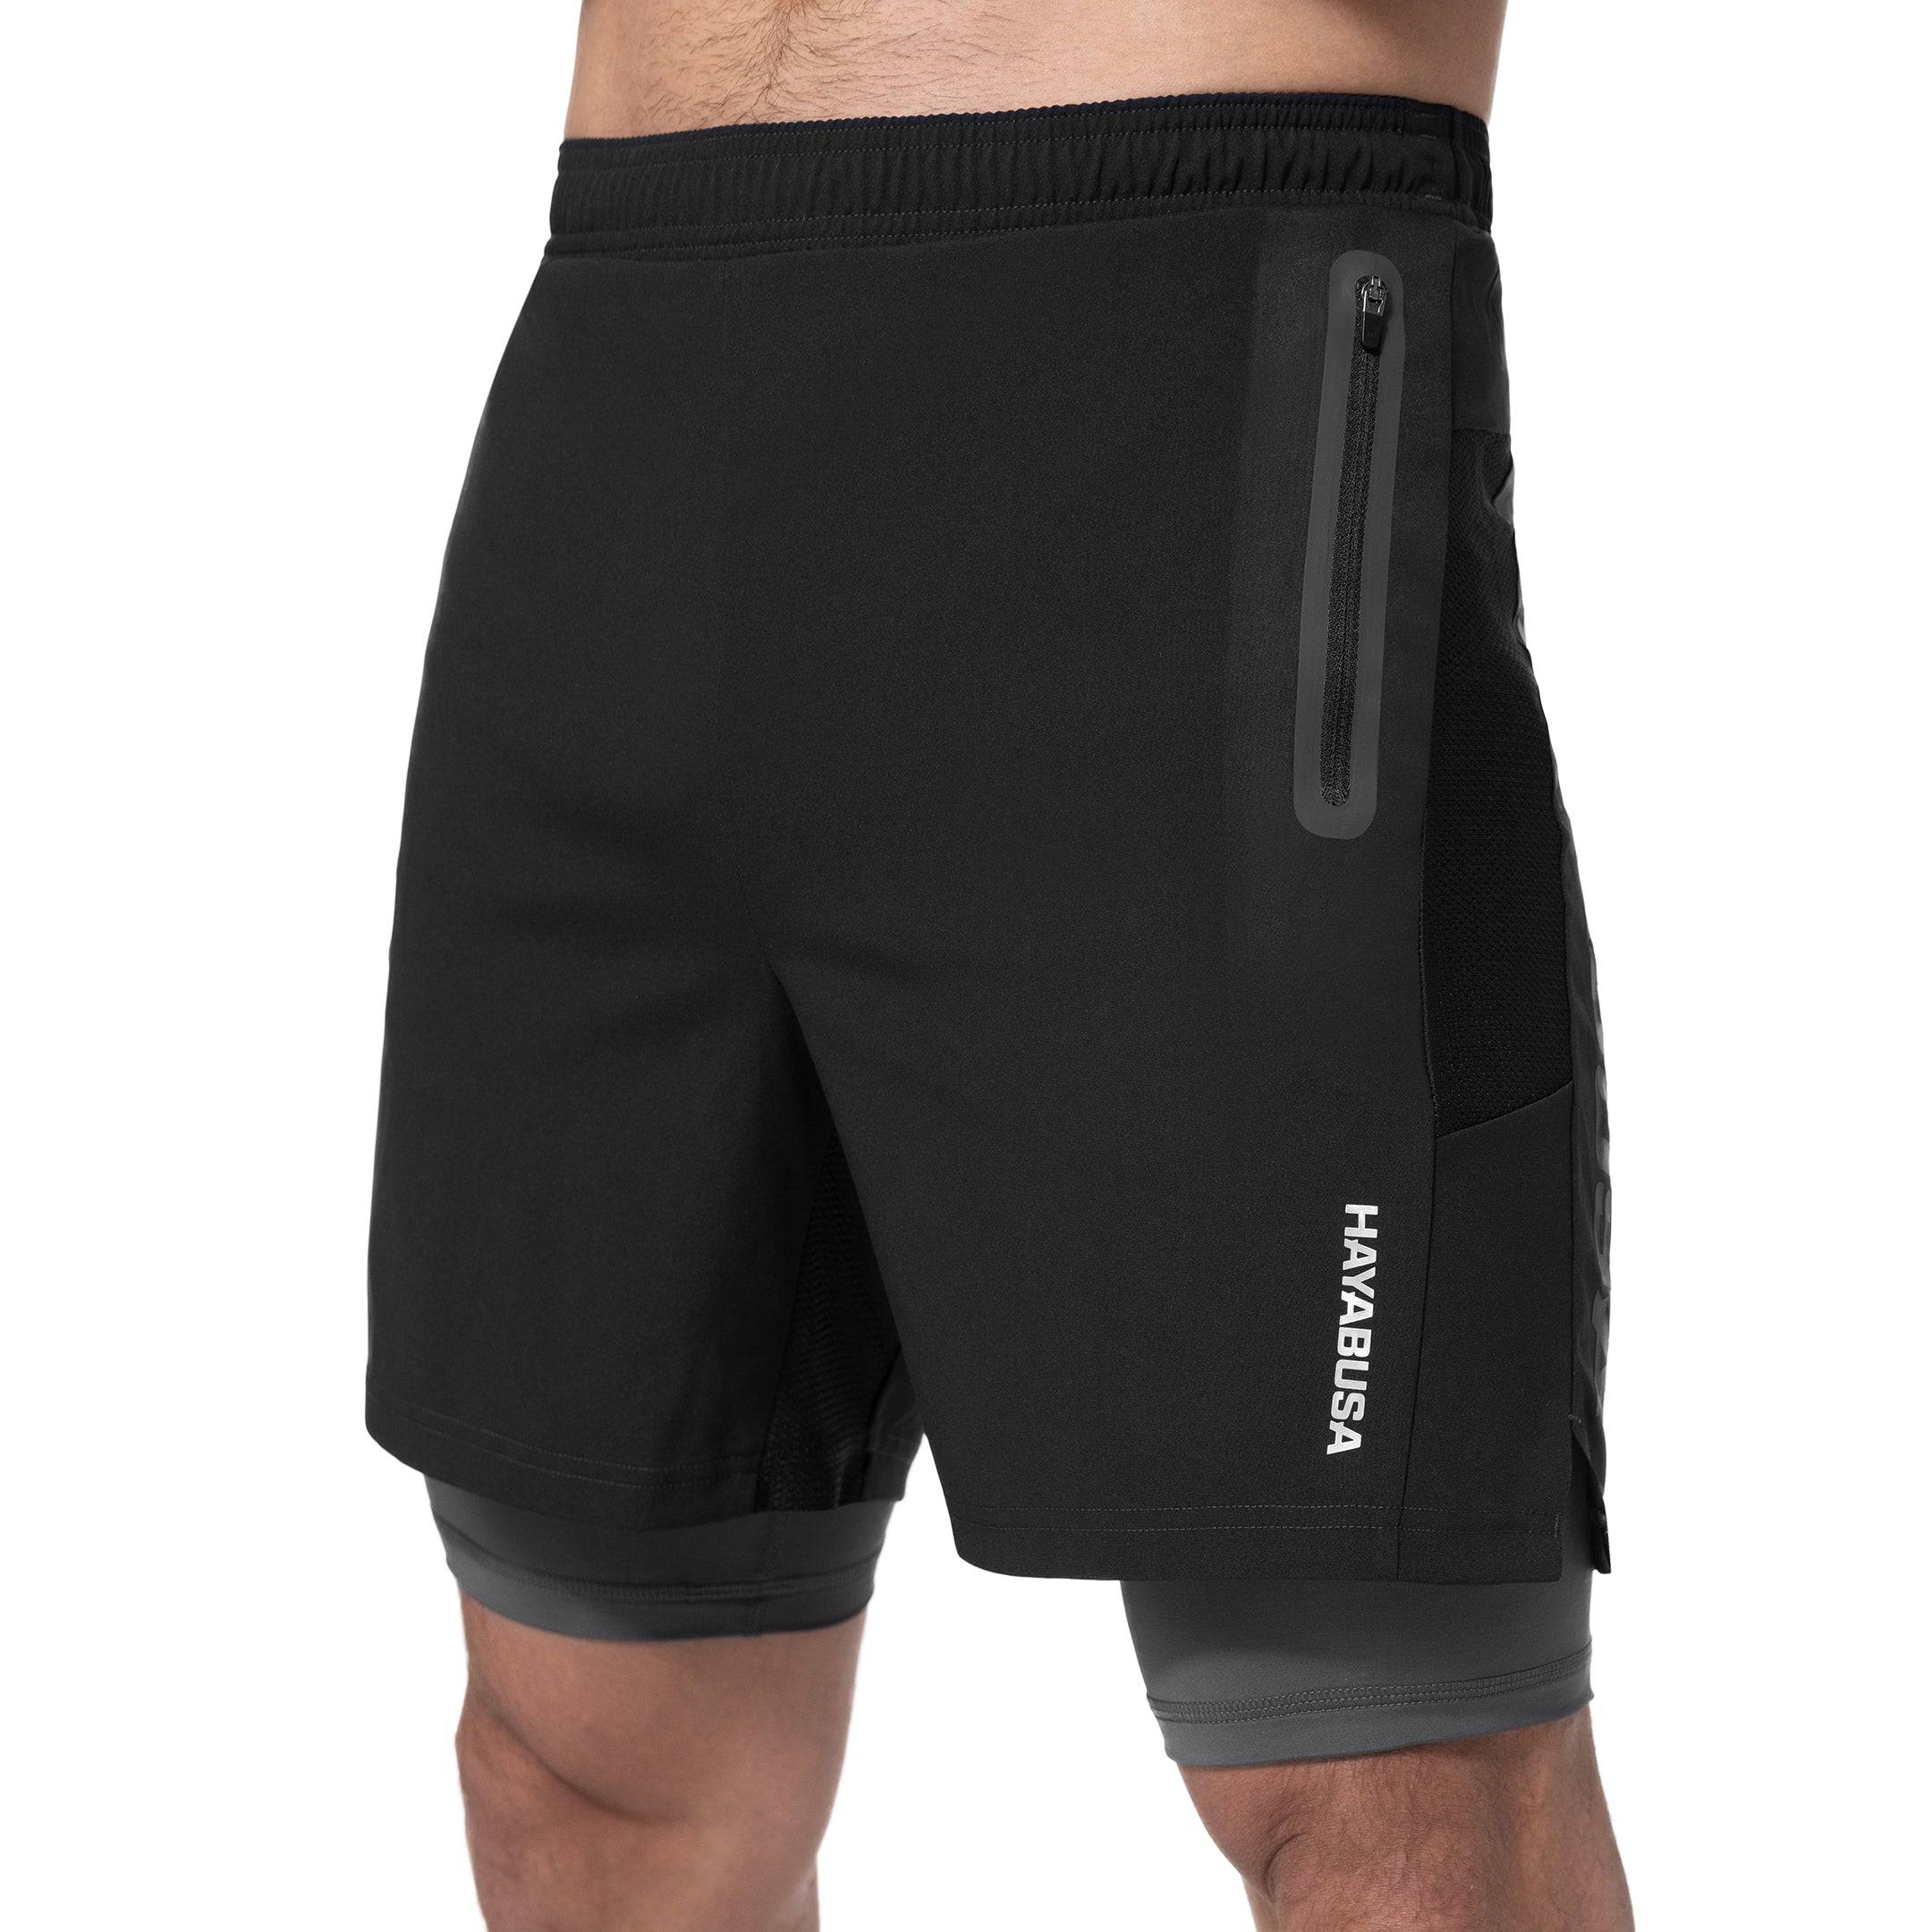 Hayabusa | Men’s Layered Performance Shorts - XTC Fitness - Exercise Equipment Superstore - Canada - Shorts